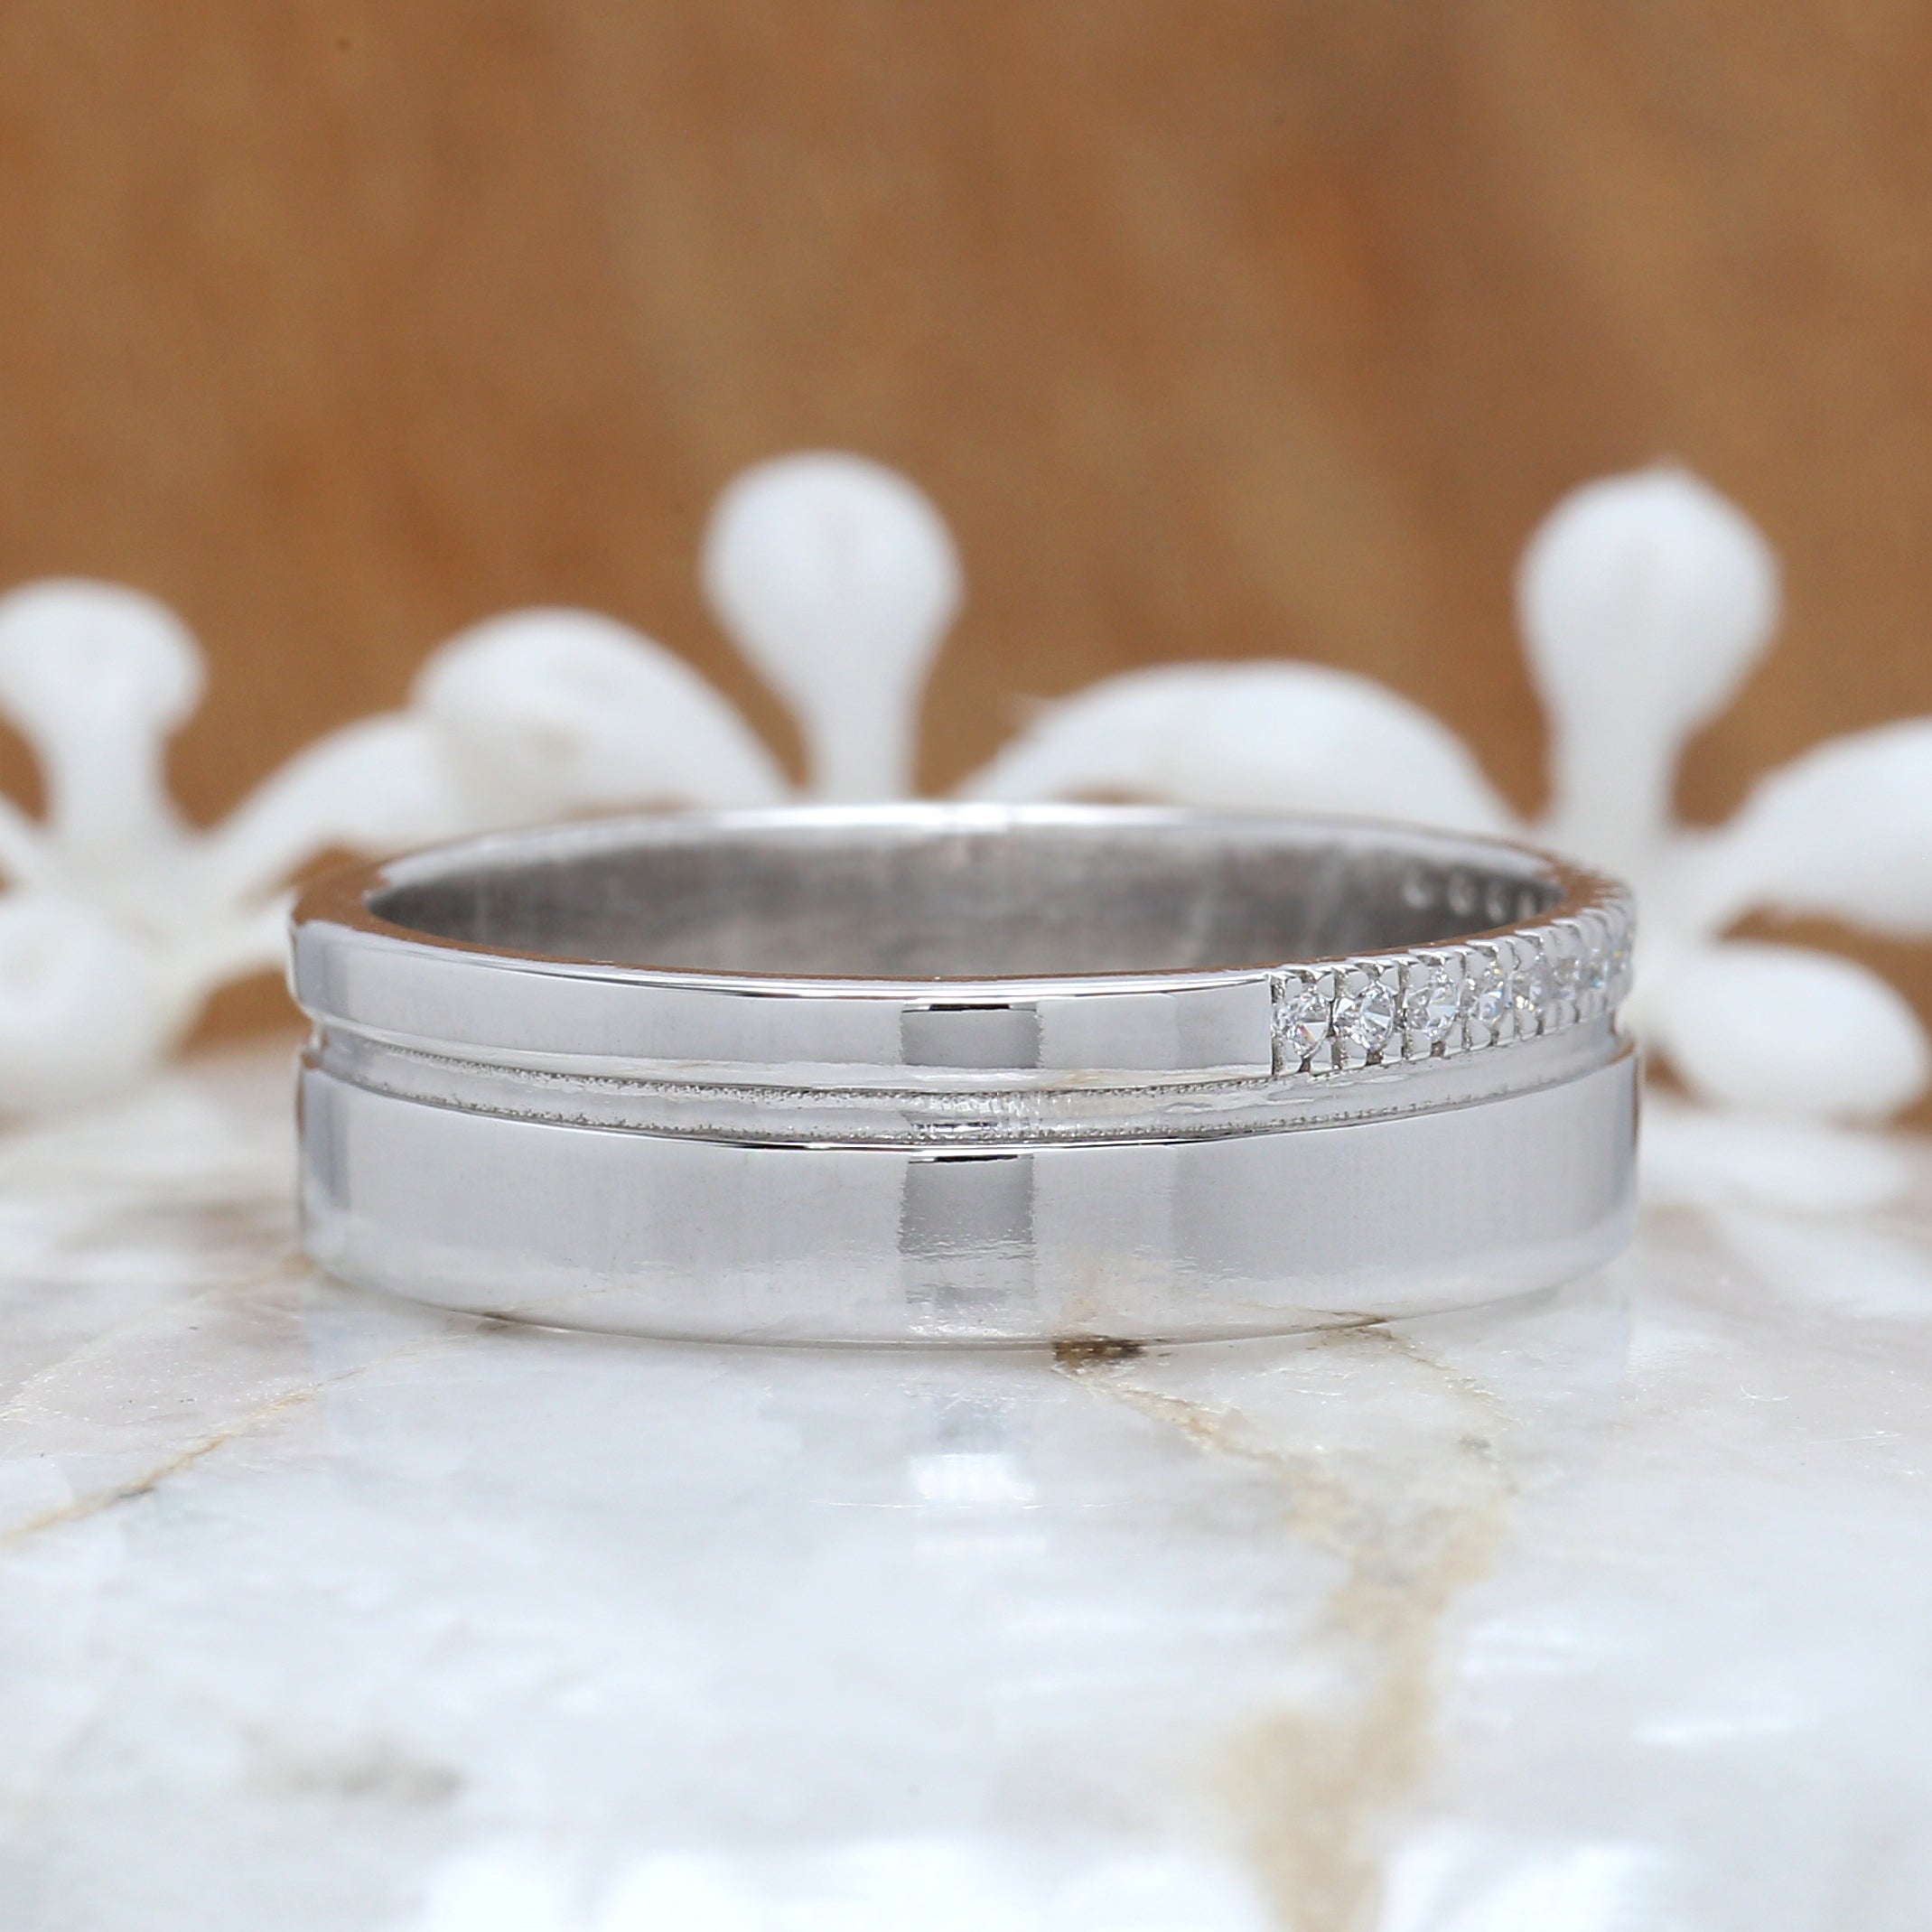 0.11 Ct, Men's Wedding Ring, White Diamond Band, Ring For Men, Round Diamond Band, Unique Men's Ring, Gift For Him, KD934